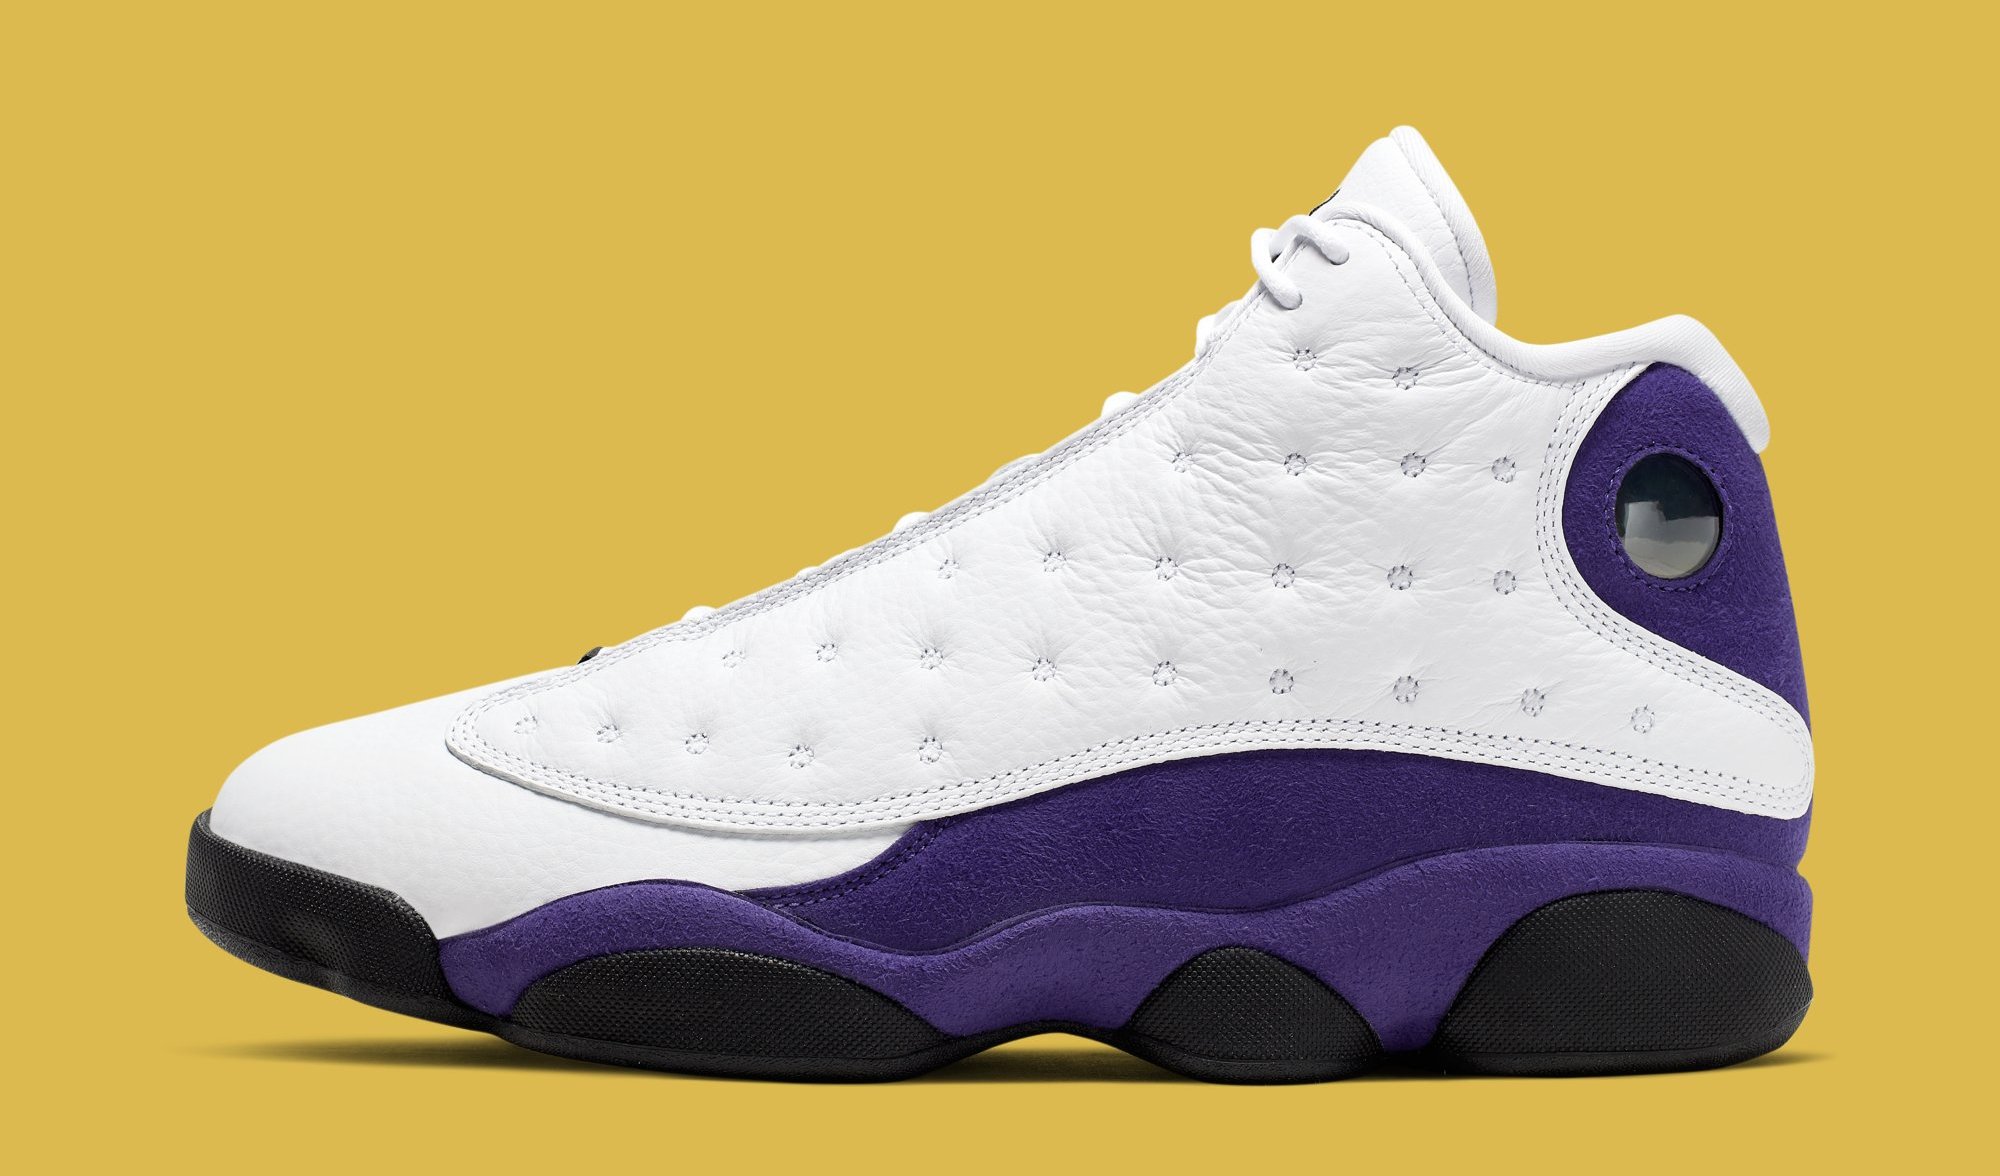 Air Jordan 13 &#x27;Lakers&#x27; White/Black/Court Purple/University Gold 414571 105 (Lateral)